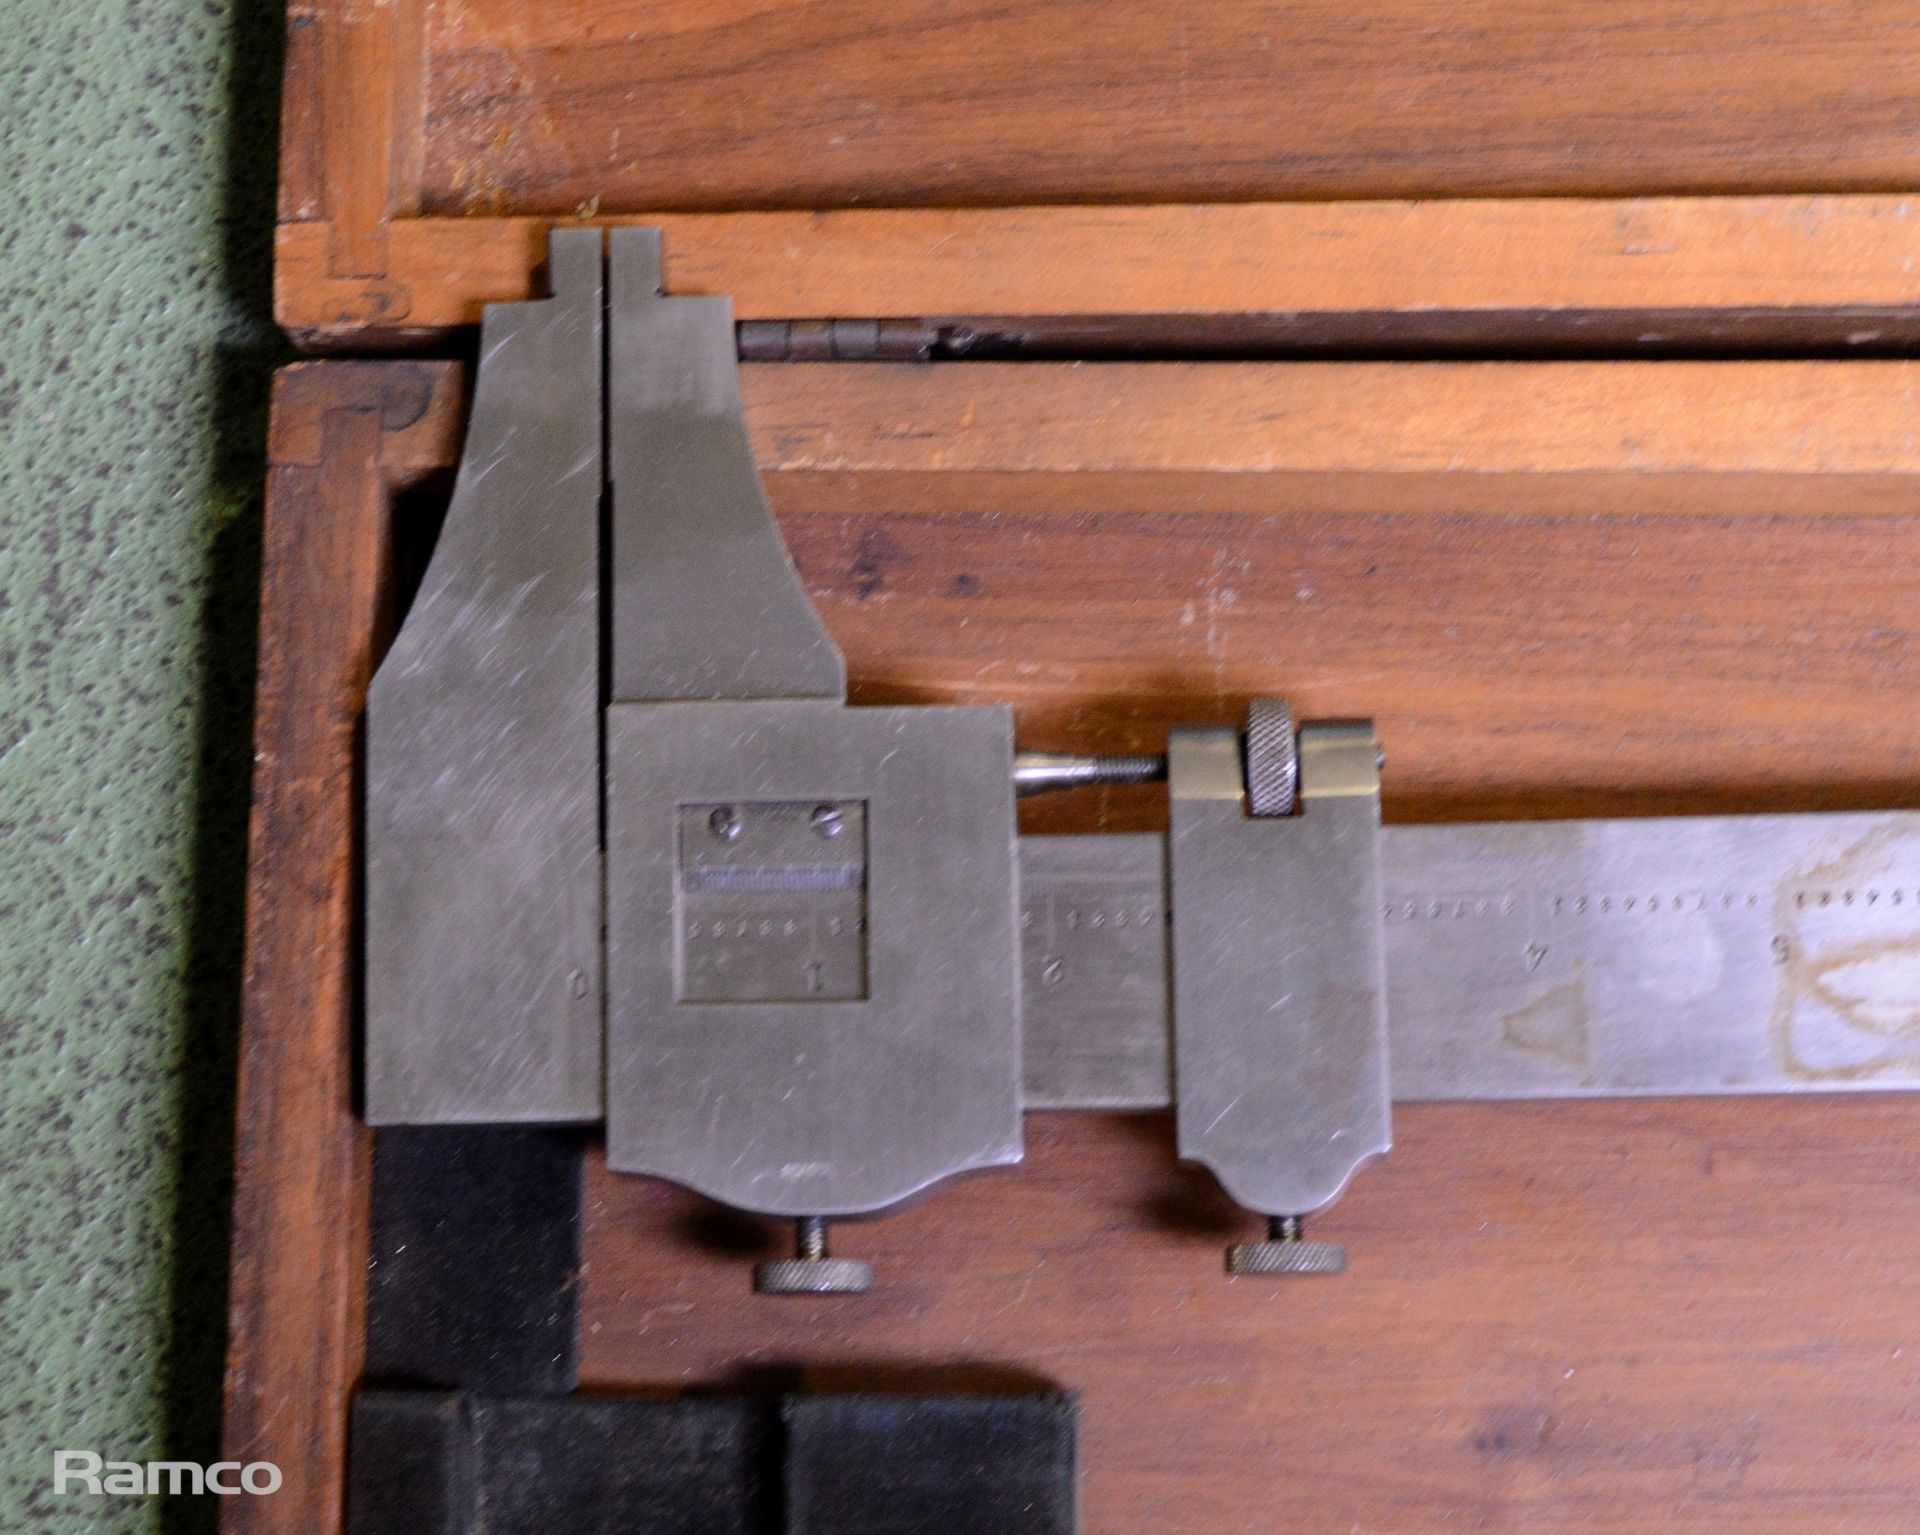 Brown & Sharpe Mfg Co. 37 inch Vernier Caliper in Wooden Case - Image 3 of 5